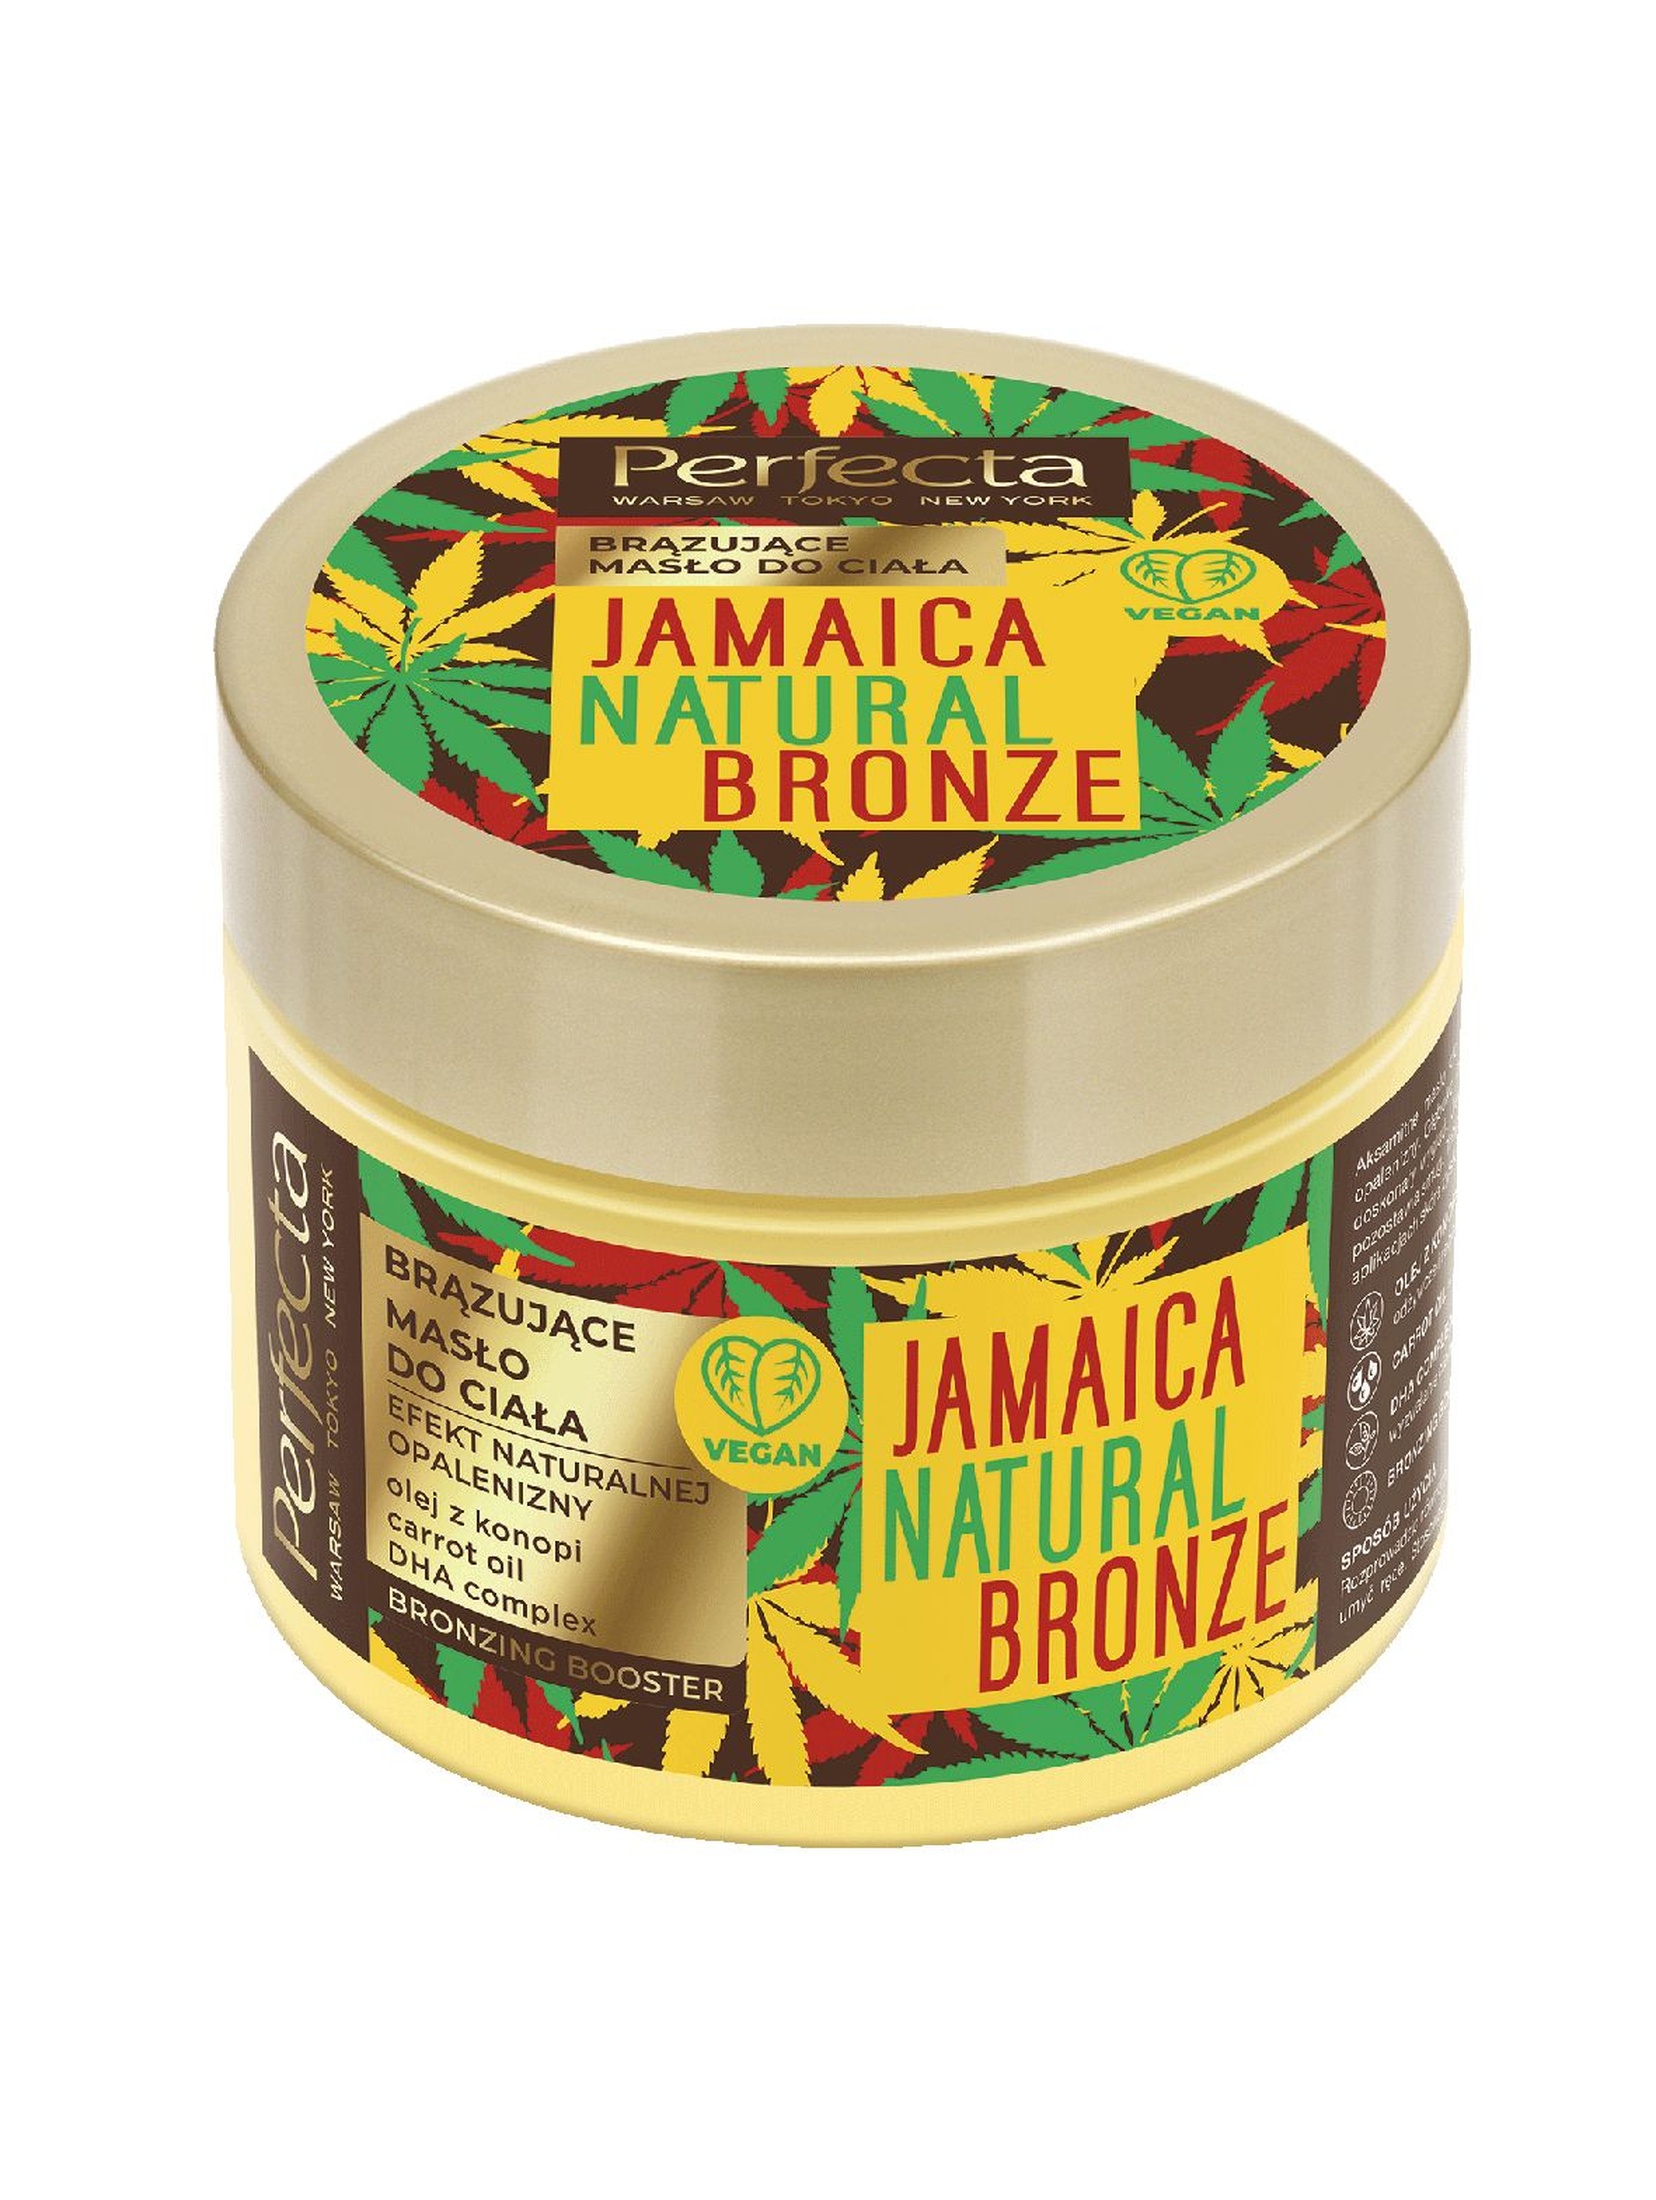 Perfecta Jamaica Natural Bronze, brązujace masło do ciała, 300 g